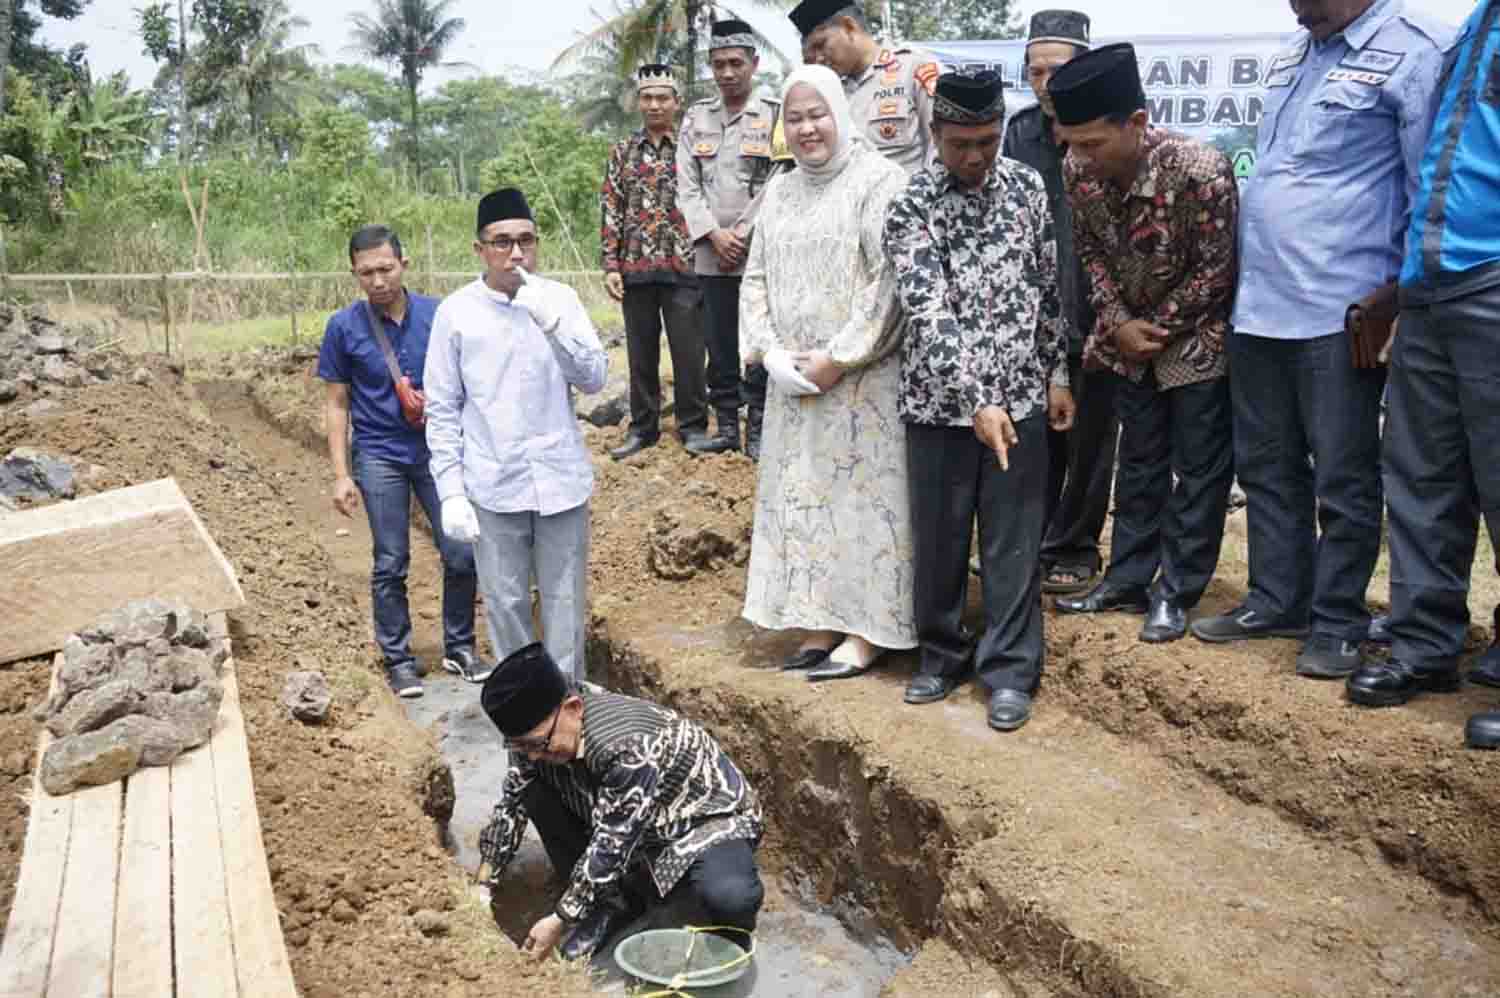 Bersama Baznas dan Bank Bengkulu, Pemkab Kepahiang Dukung Pembangunan Masjid Al Ikhlas Desa Sukamerindu